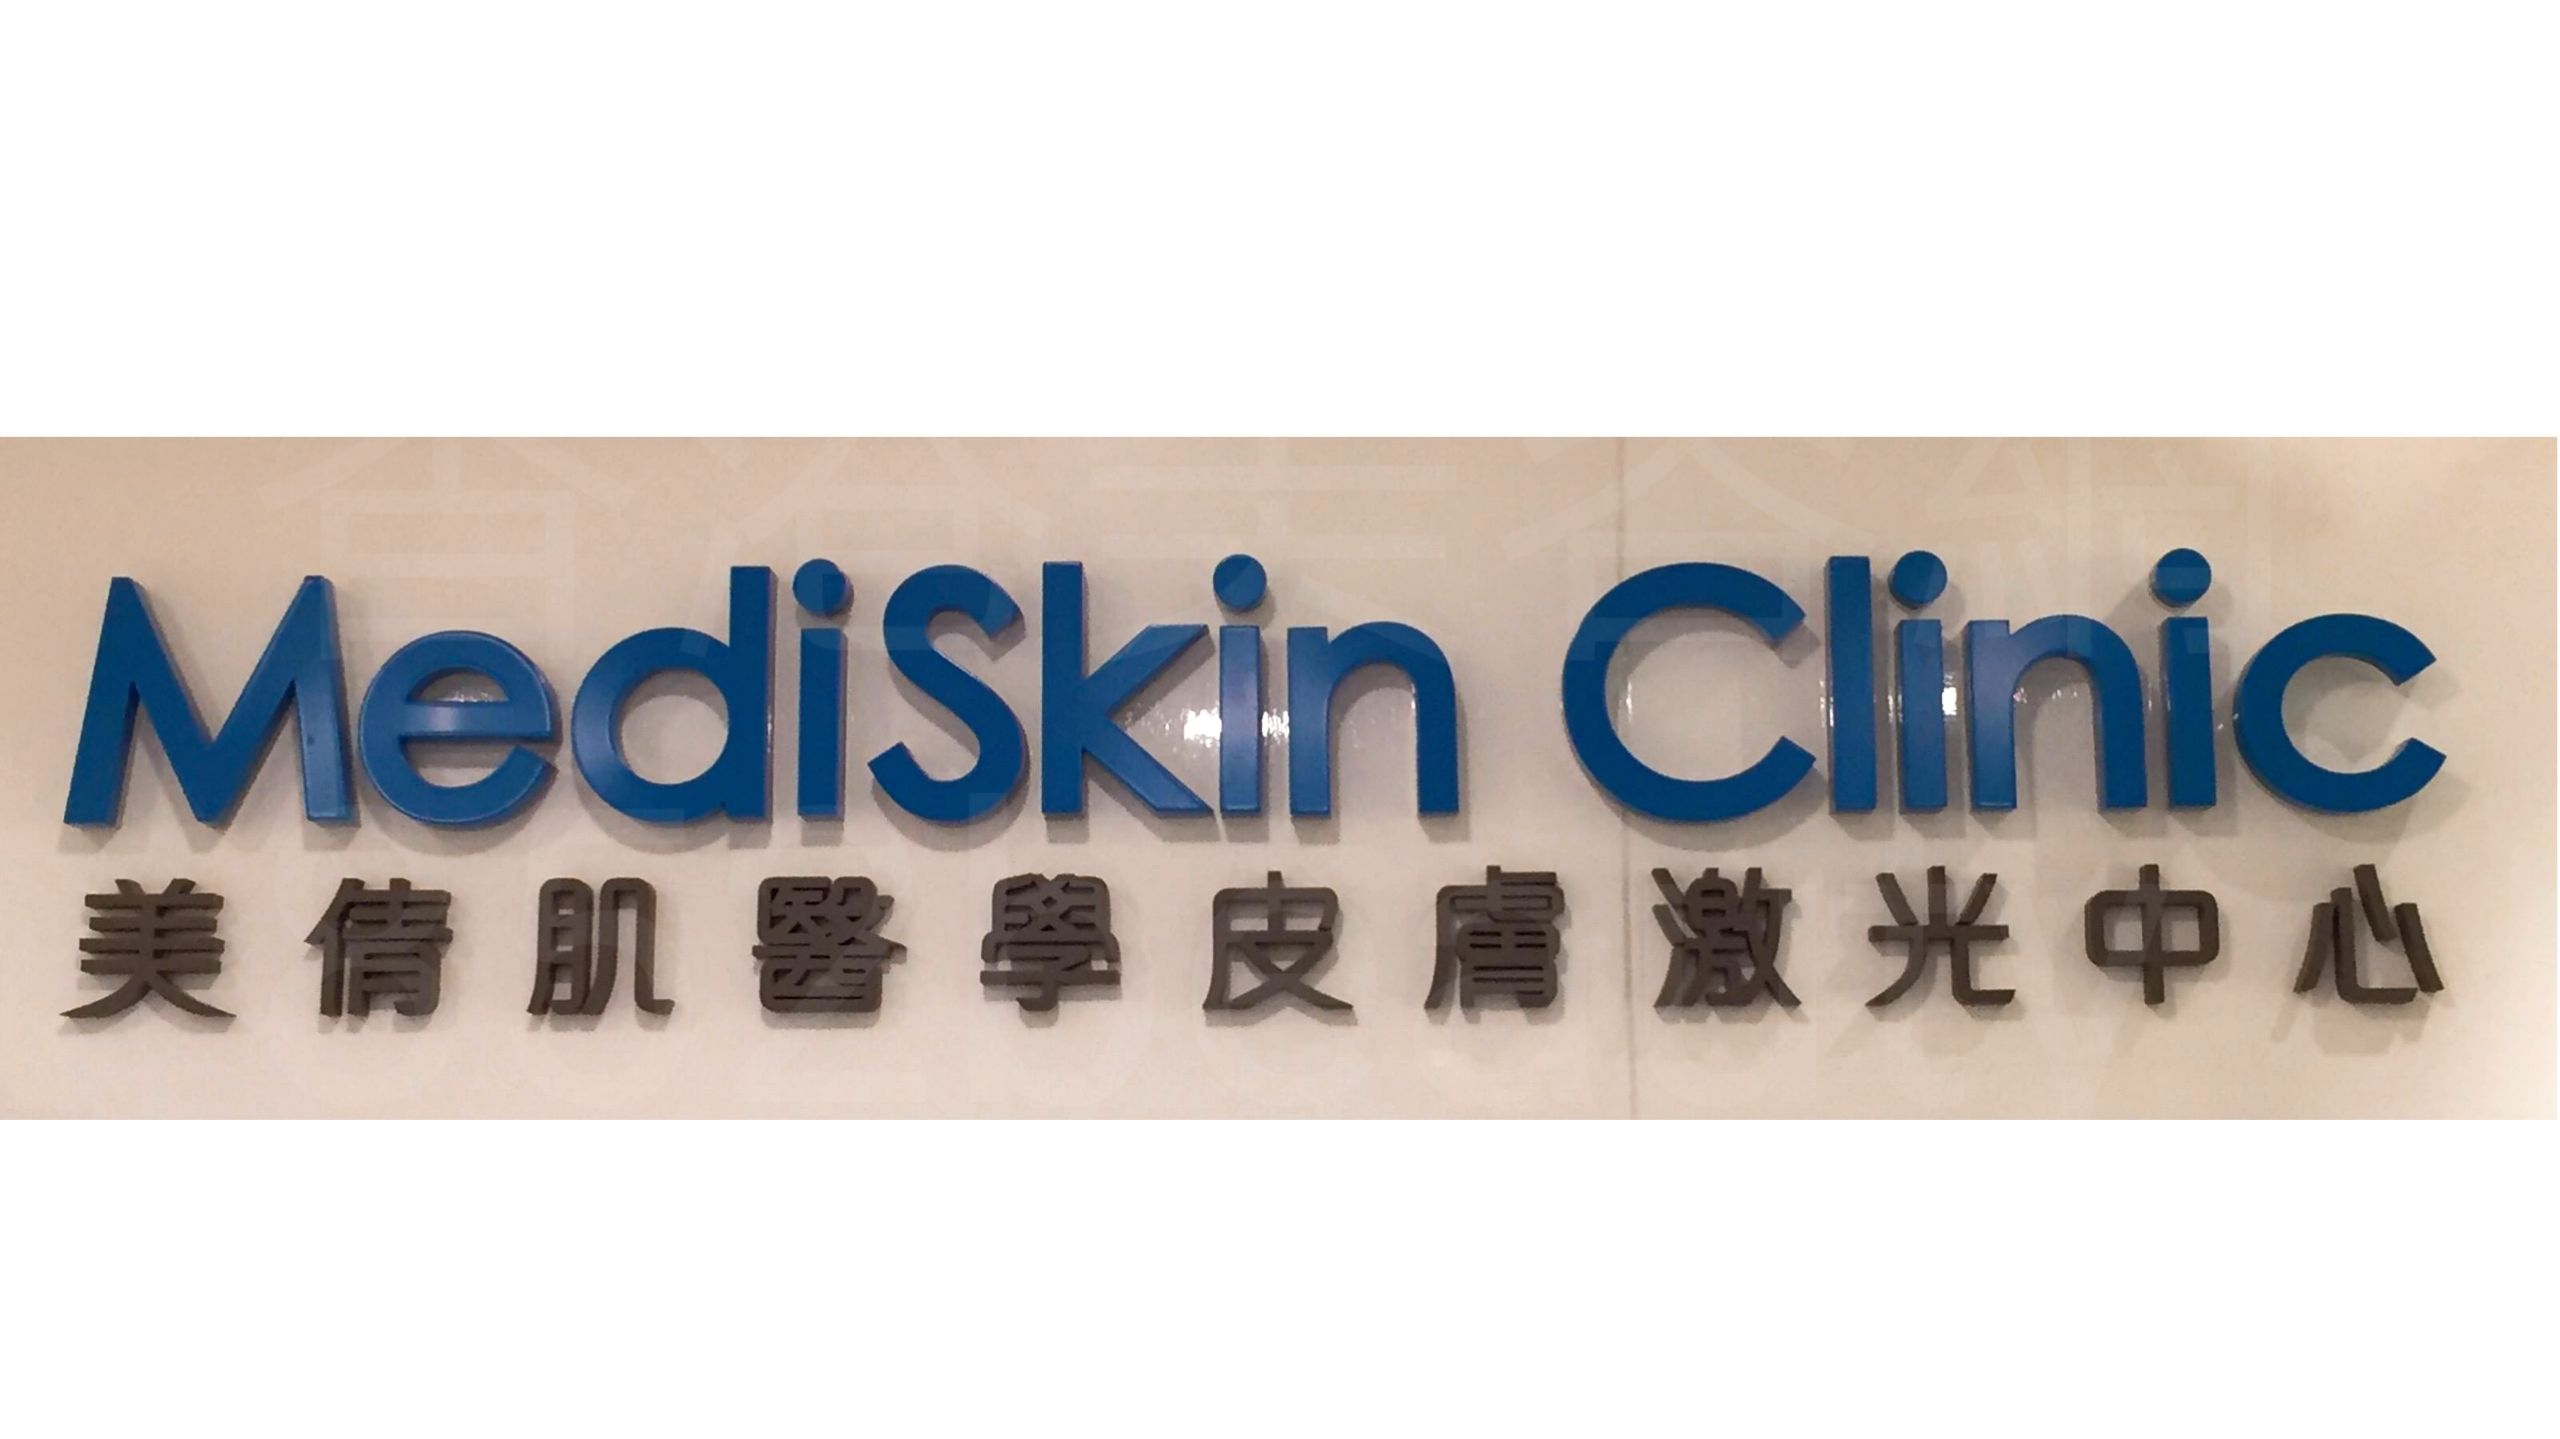 Medical Aesthetics: MediSkin Clinic 美倩肌醫學皮膚激光中心